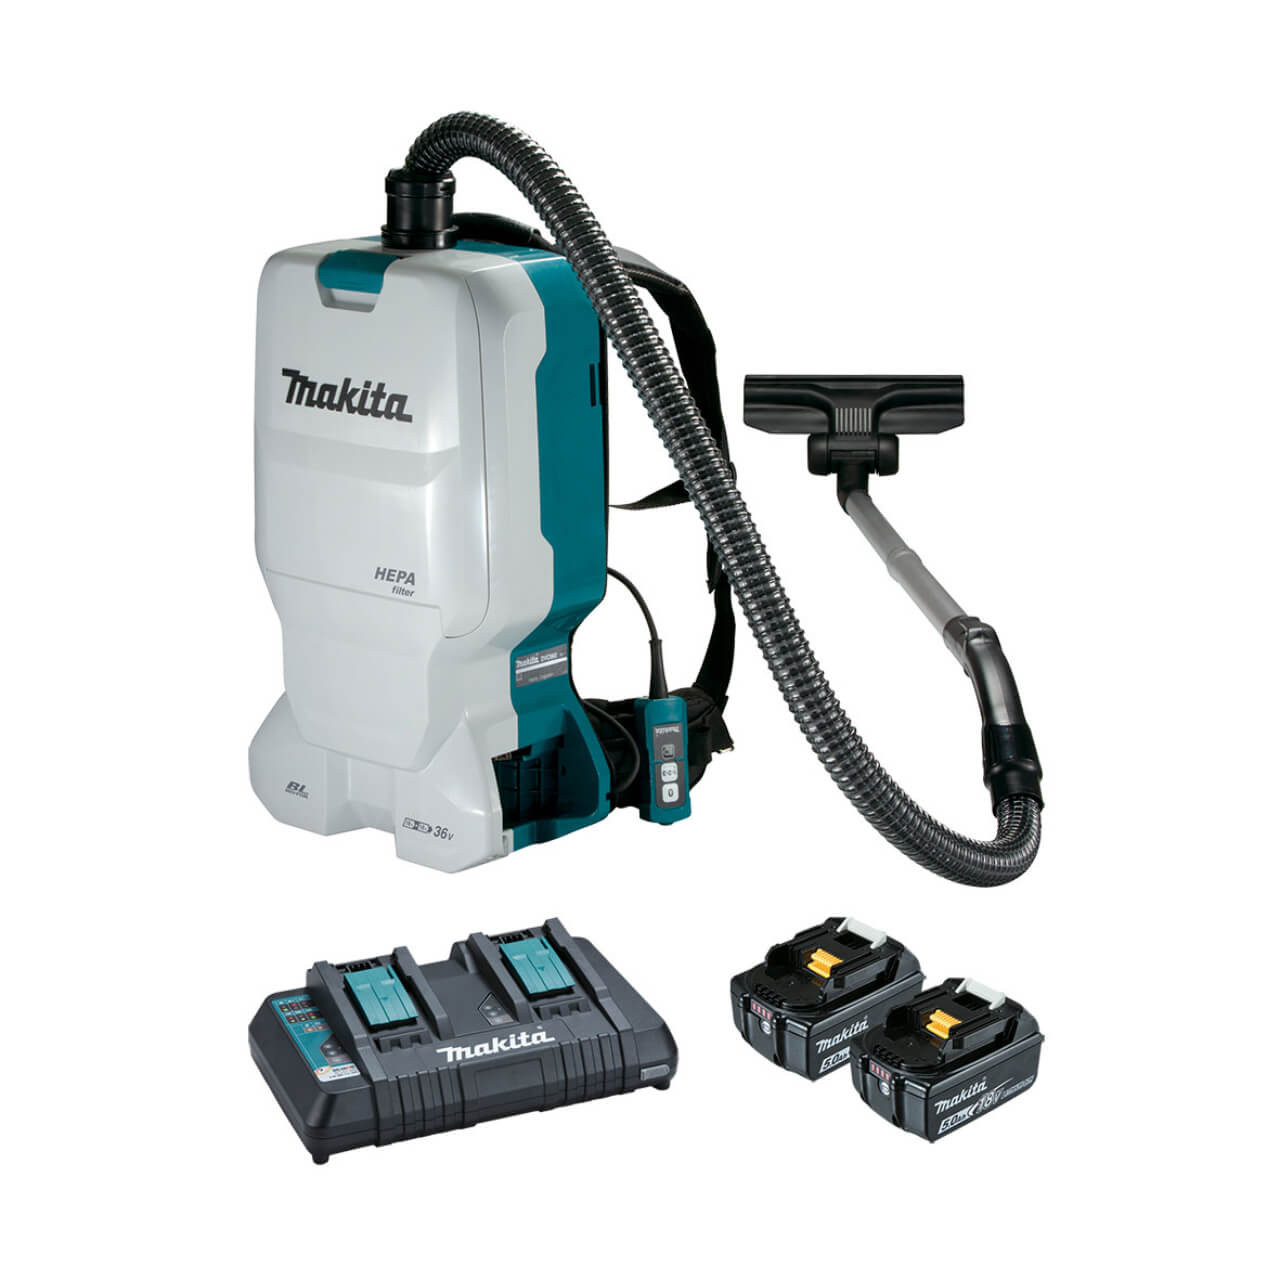 Makita 18Vx2 BRUSHLESS Backpack Vacuum Kit. 6L Tank Capacity - Includes 2 x 5.0Ah Batteries. Dual Port Rapid Charger